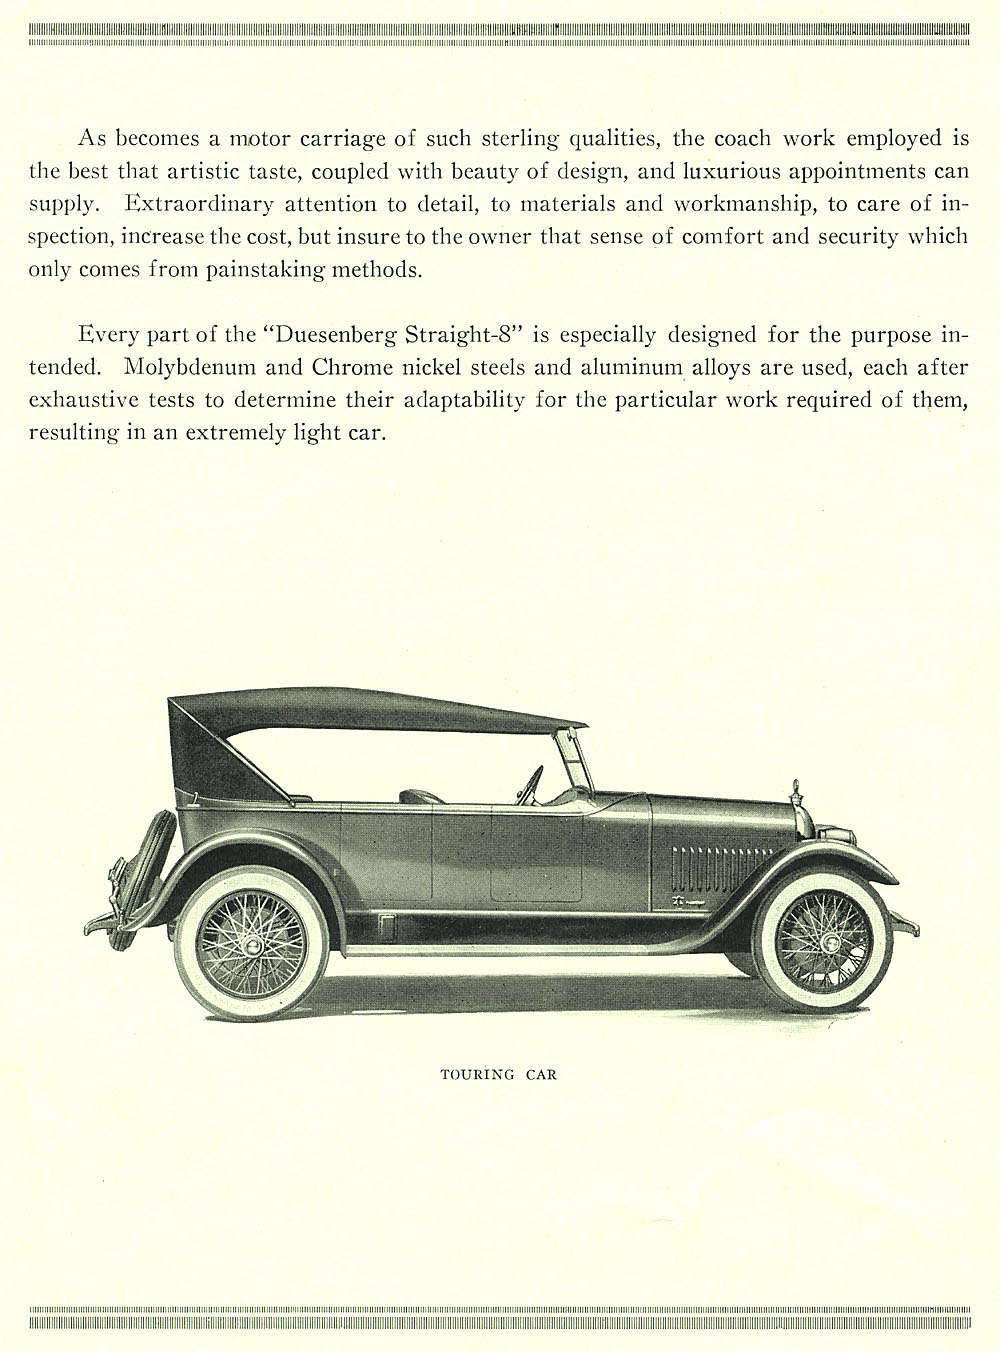 1922_Duesenberg_Model_A_Catalogue-04